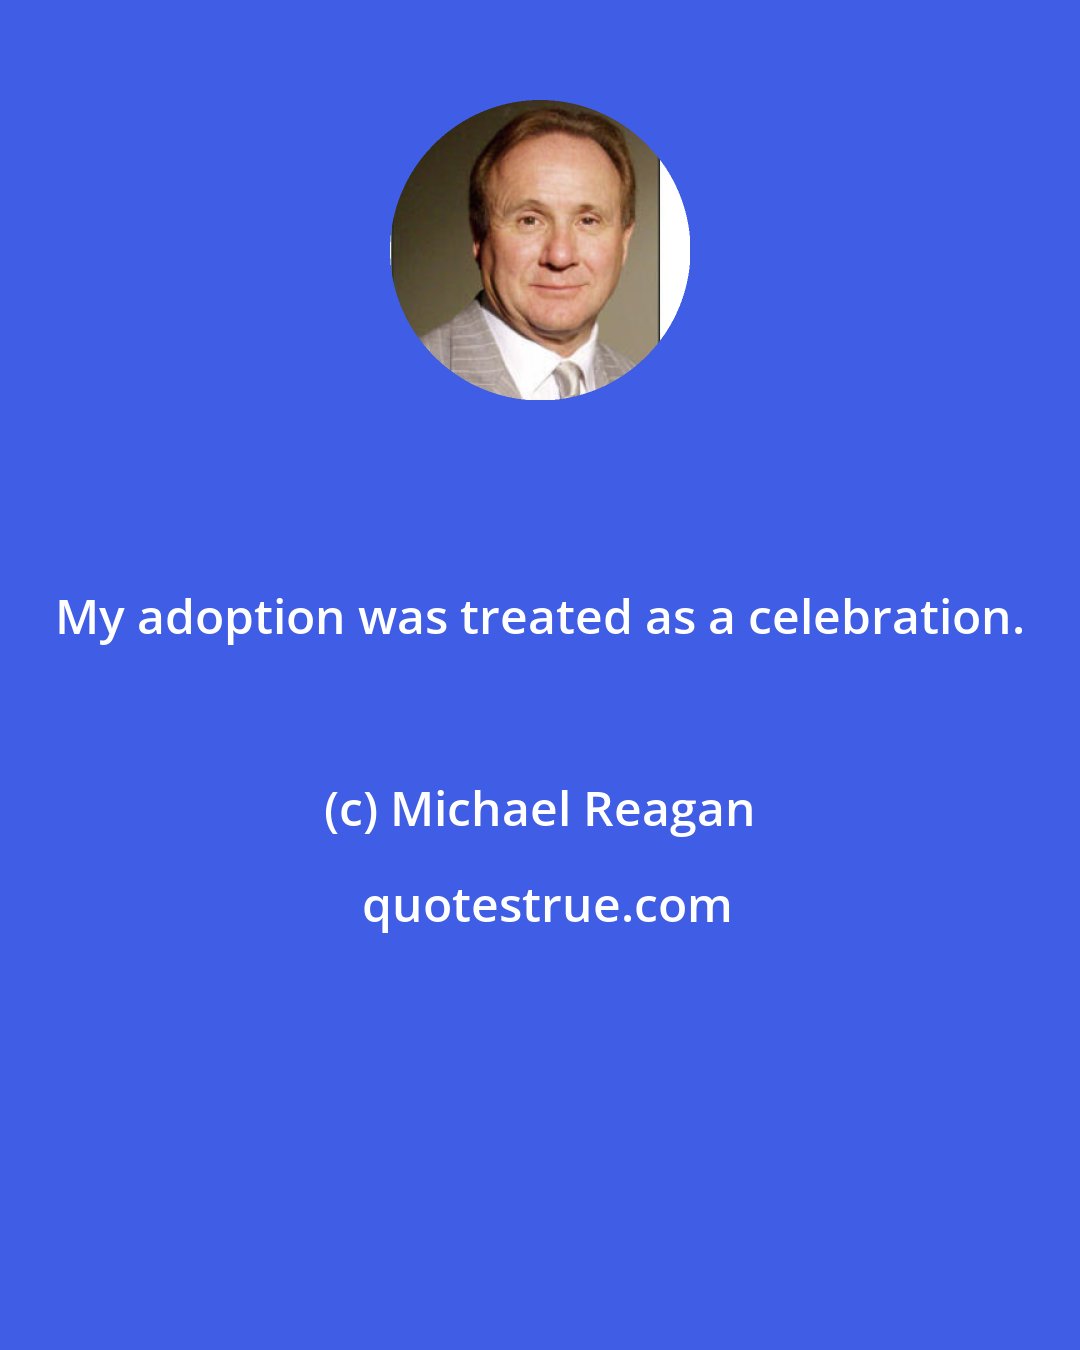 Michael Reagan: My adoption was treated as a celebration.